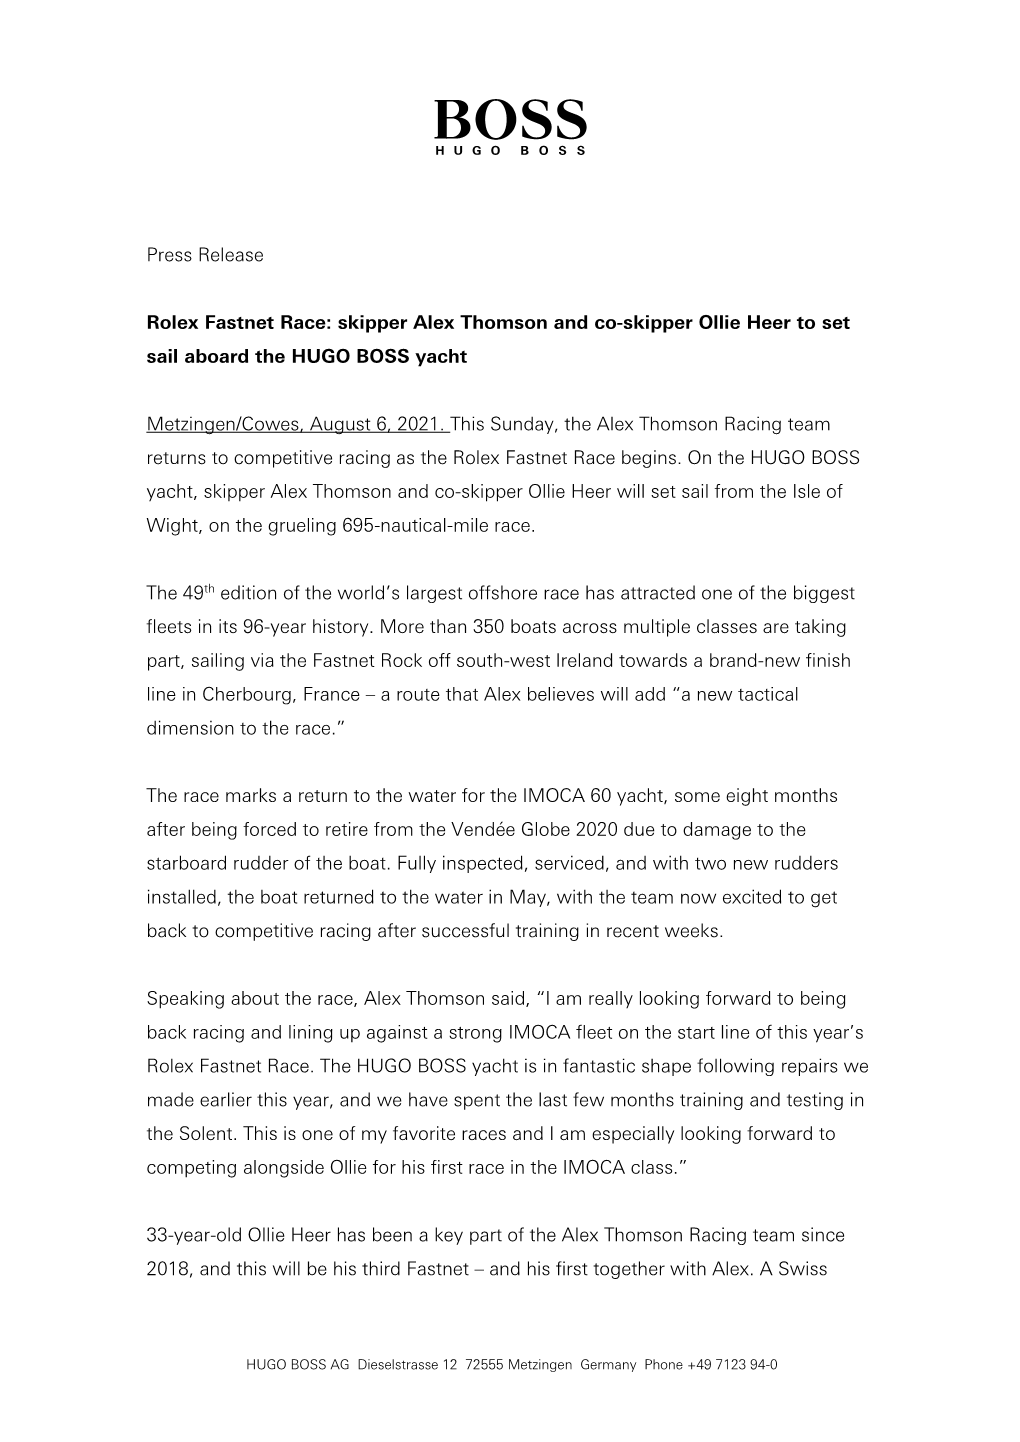 Press Release Rolex Fastnet Race: Skipper Alex Thomson and Co